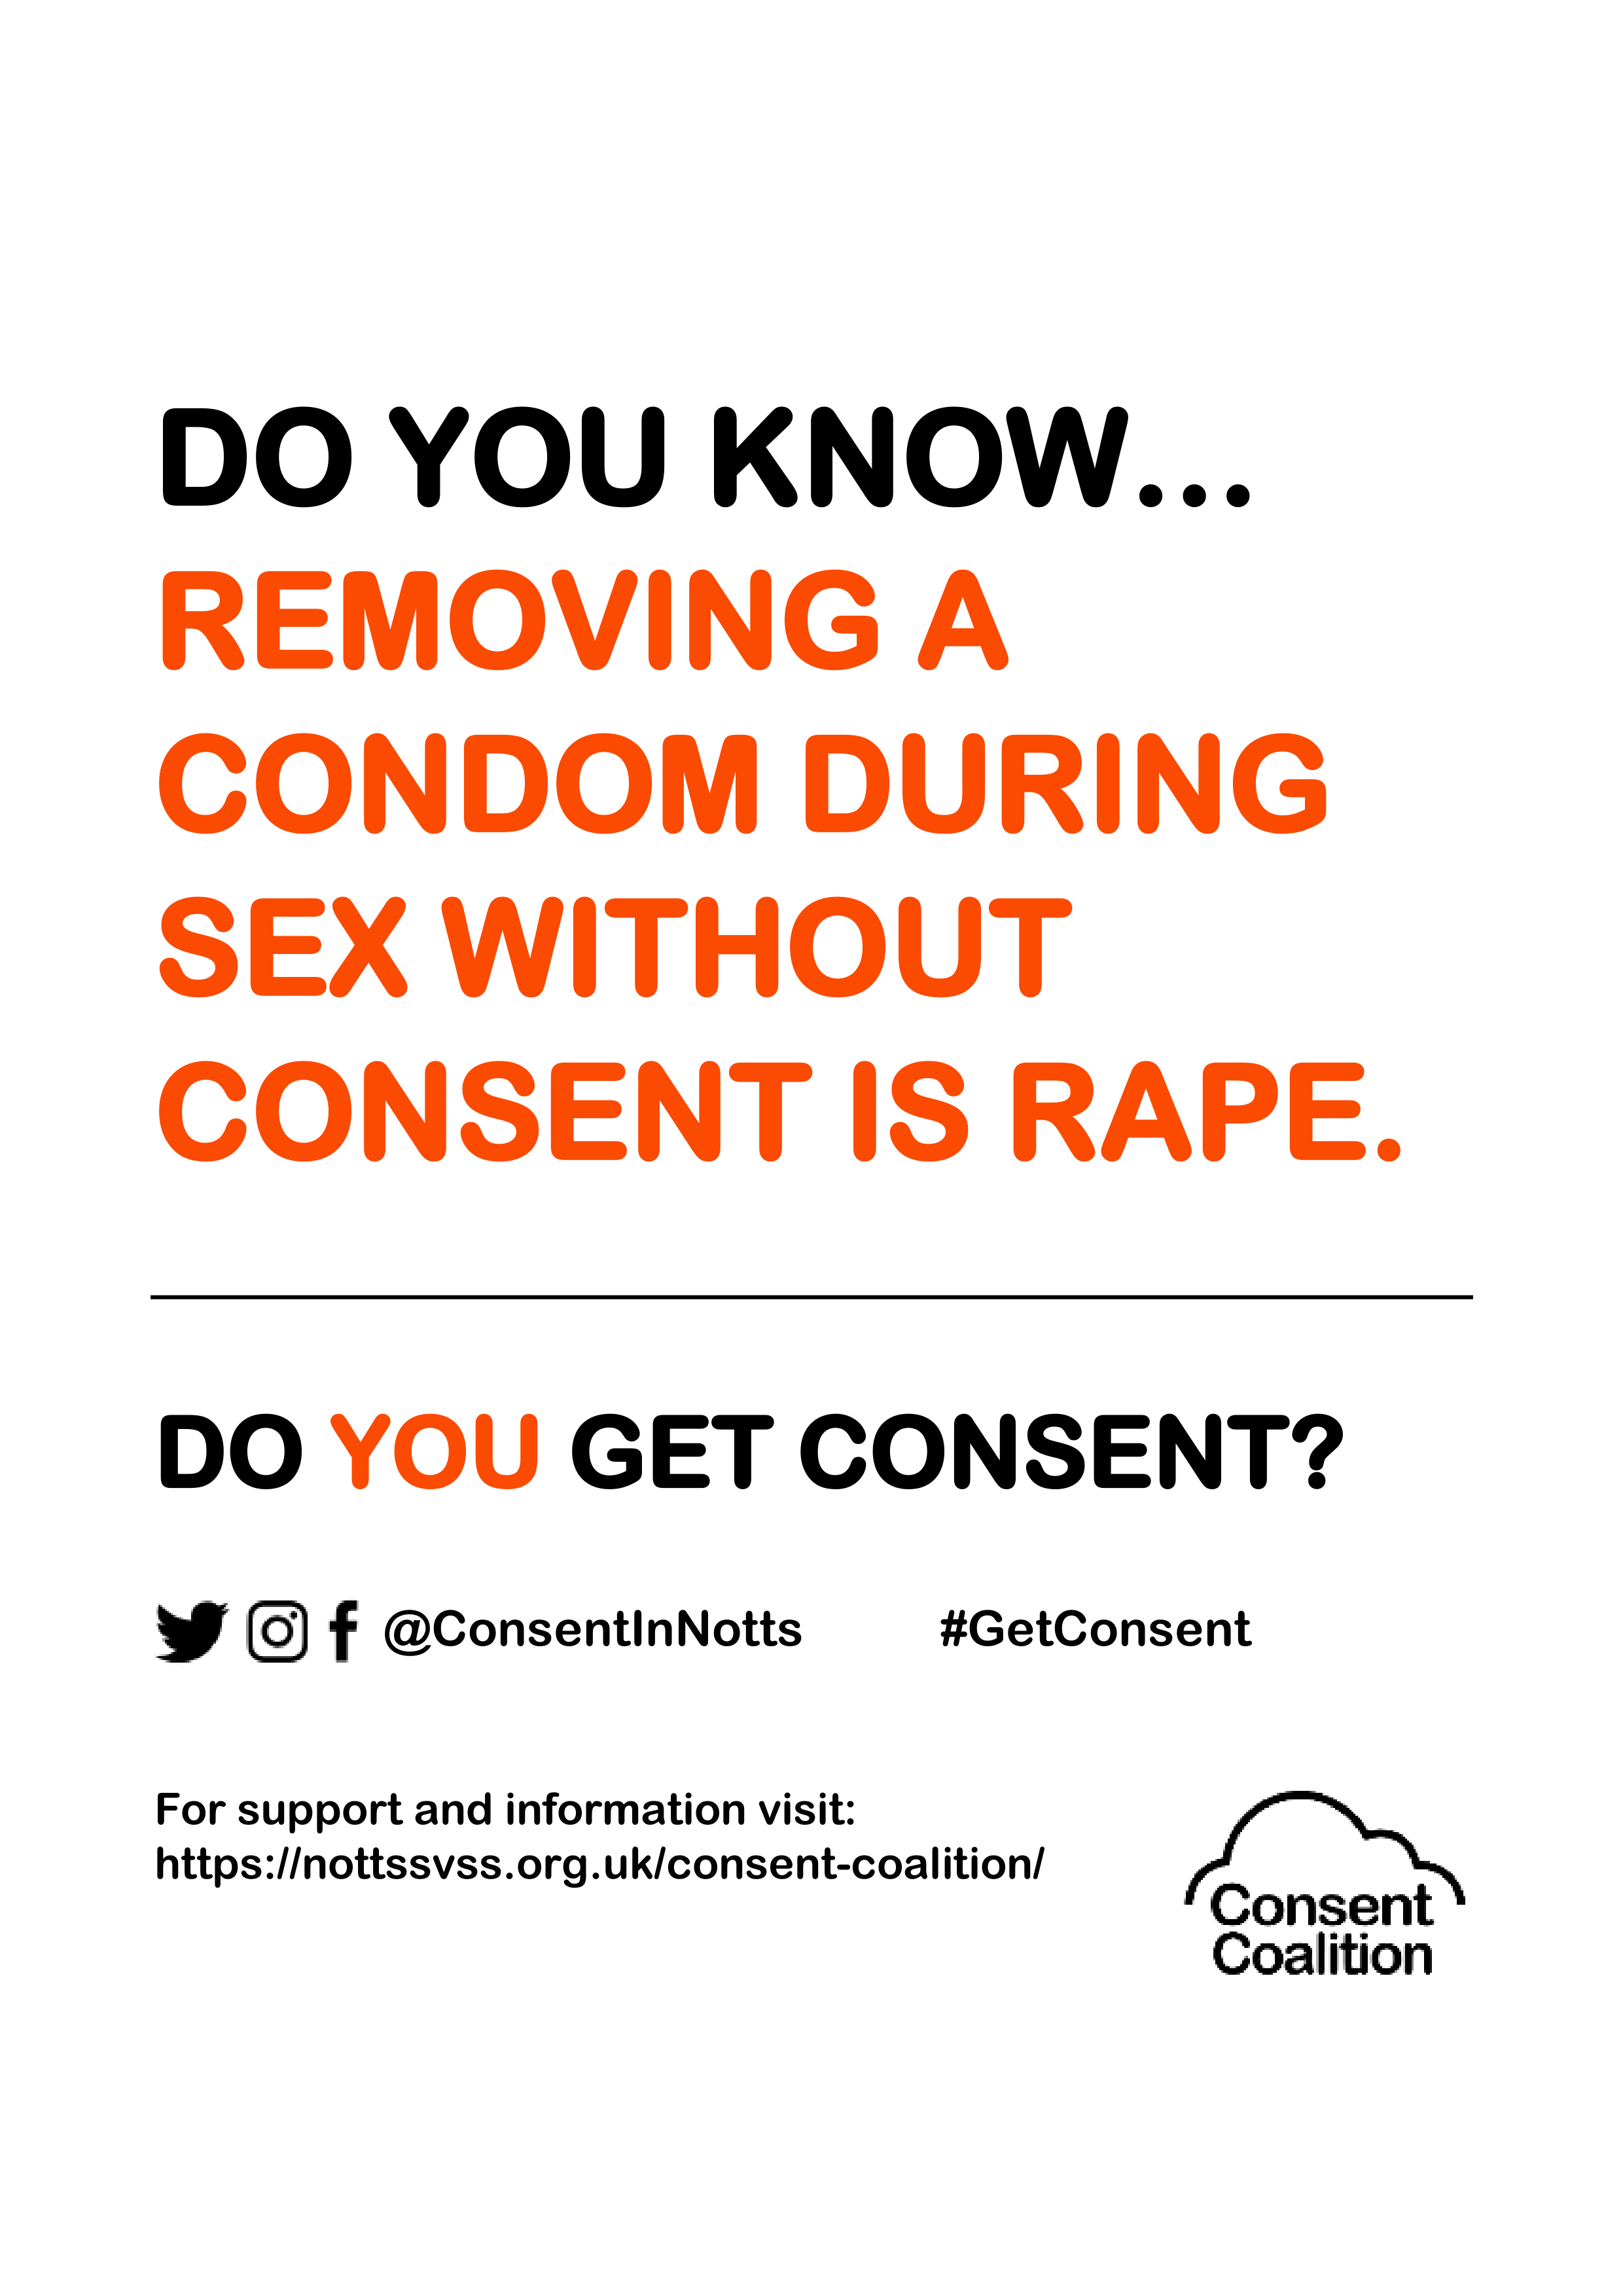 Consent Coalition